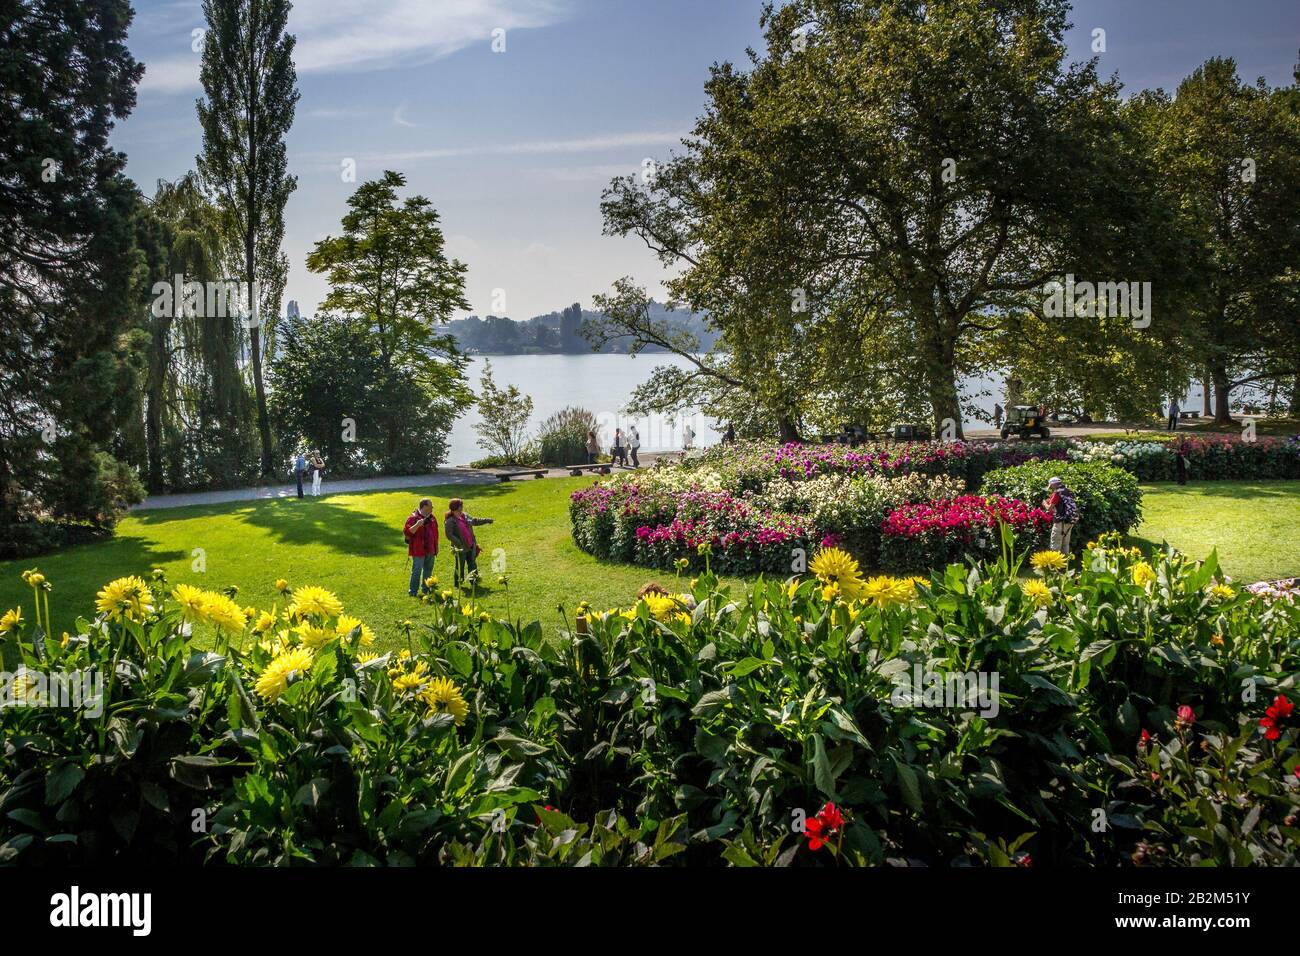 Mainau Island, Lake Constance, Germany - 11 sep. 2015: The grounds of botanical garden of Mainau Island, the inlet on Lake Constance Stock Photo